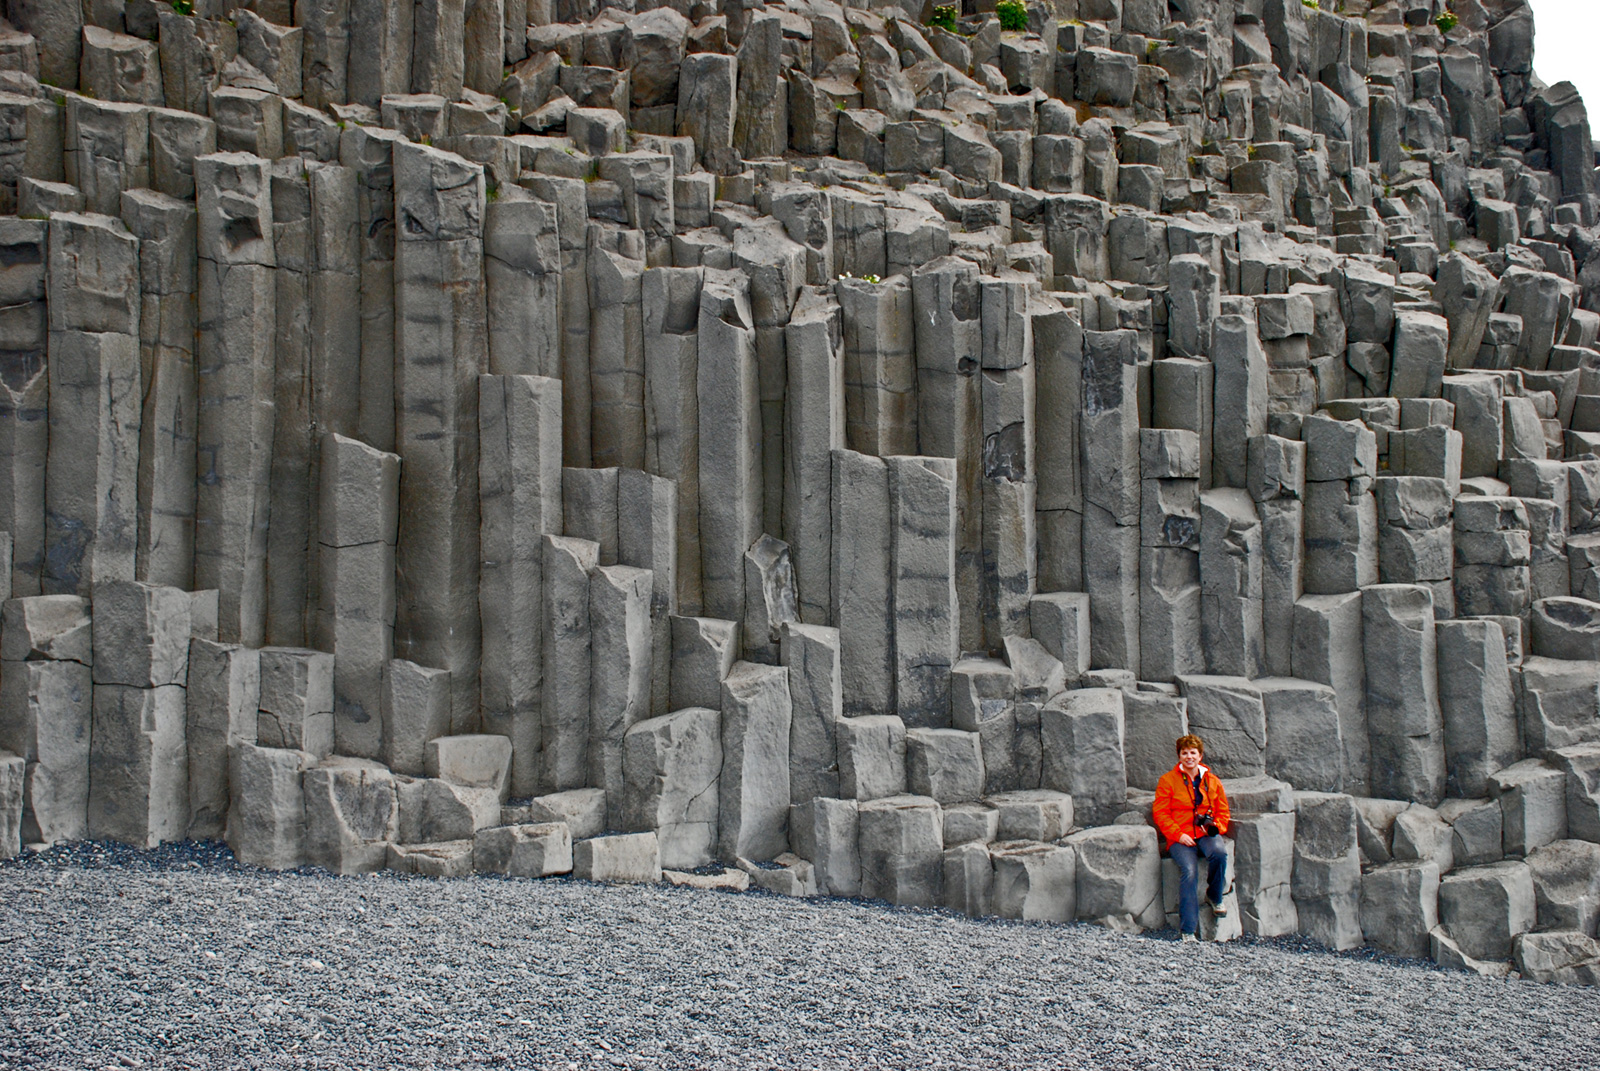 Image of basalt columns at Reynisfjara Beach in Iceland